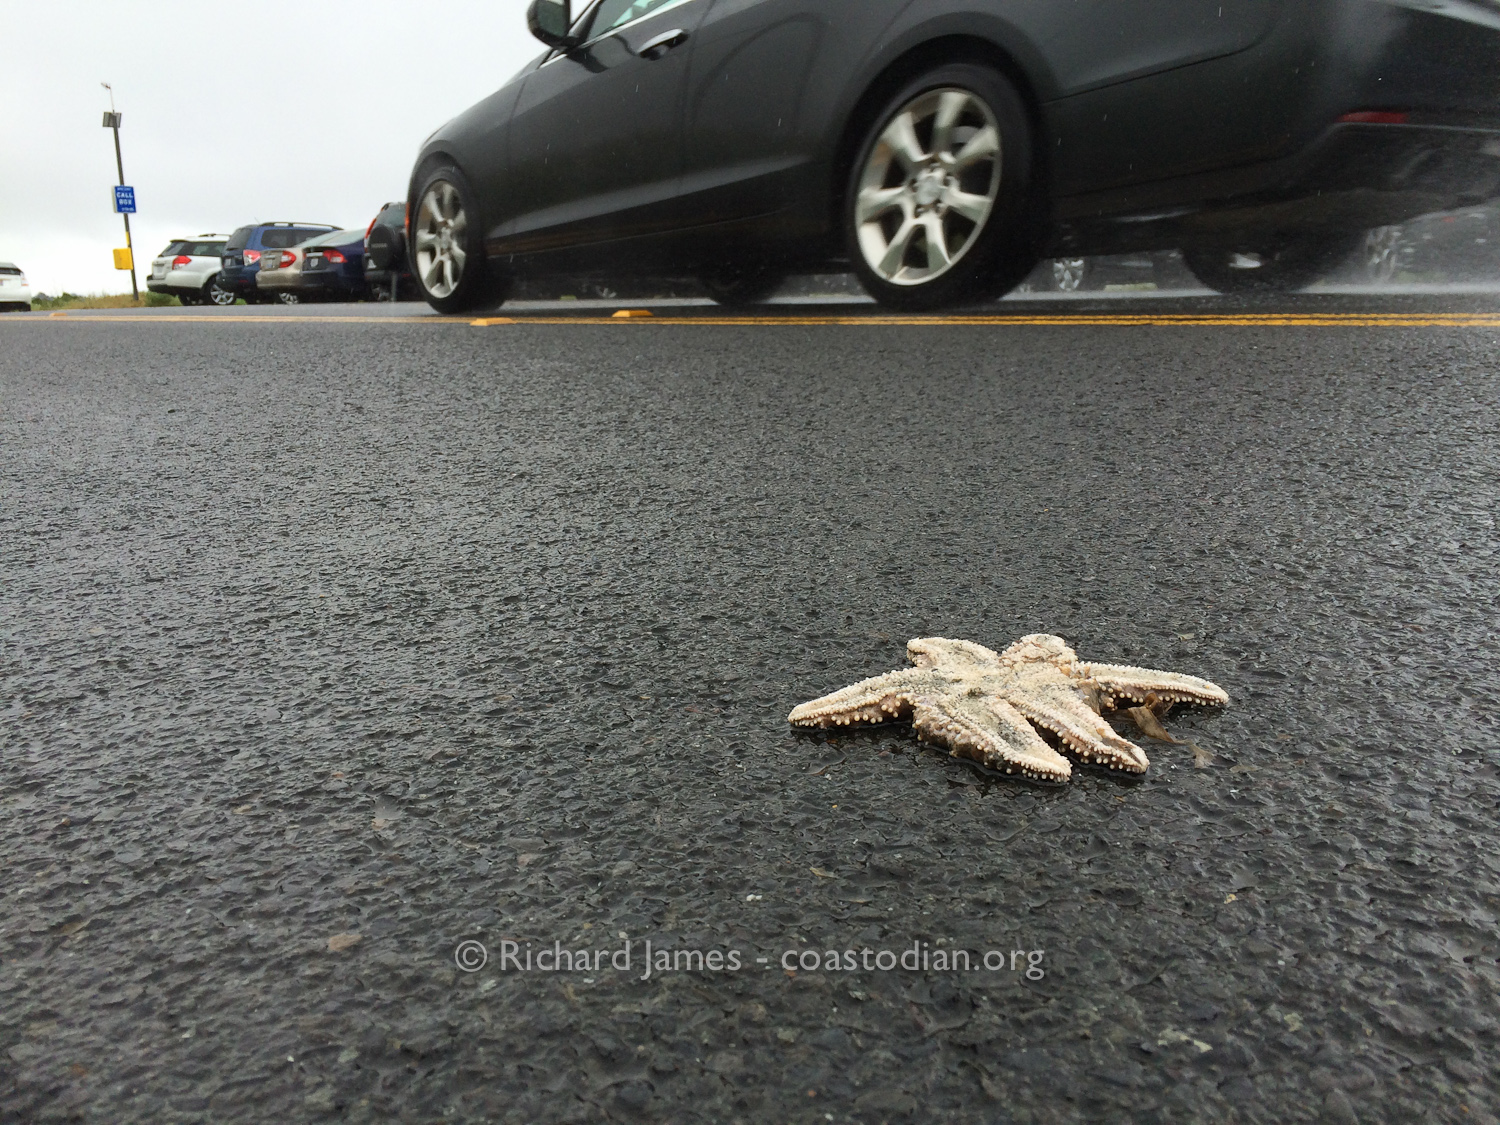 Dead Pisaster starfish tossed into the road. ©Richard James - coastodian.org